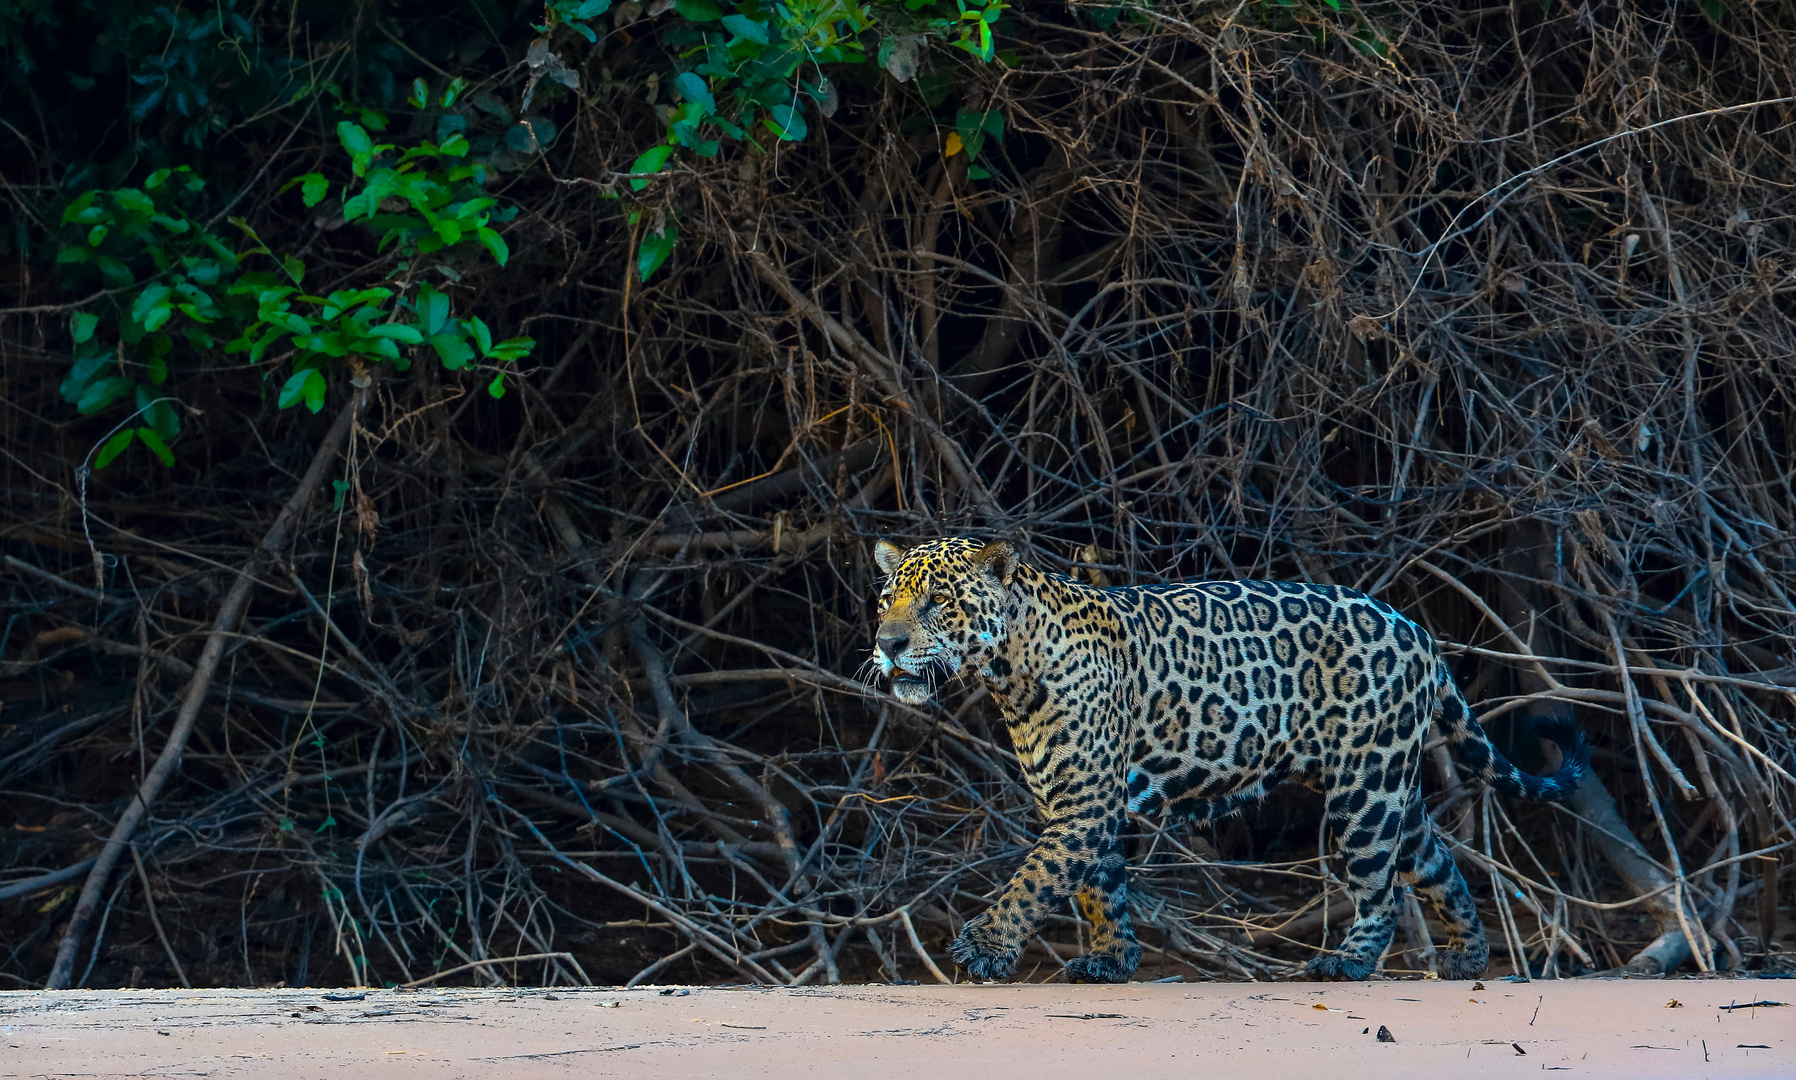 Seltener Anblick - ein Jaguar im Pantanal Gebiet in Brasilien